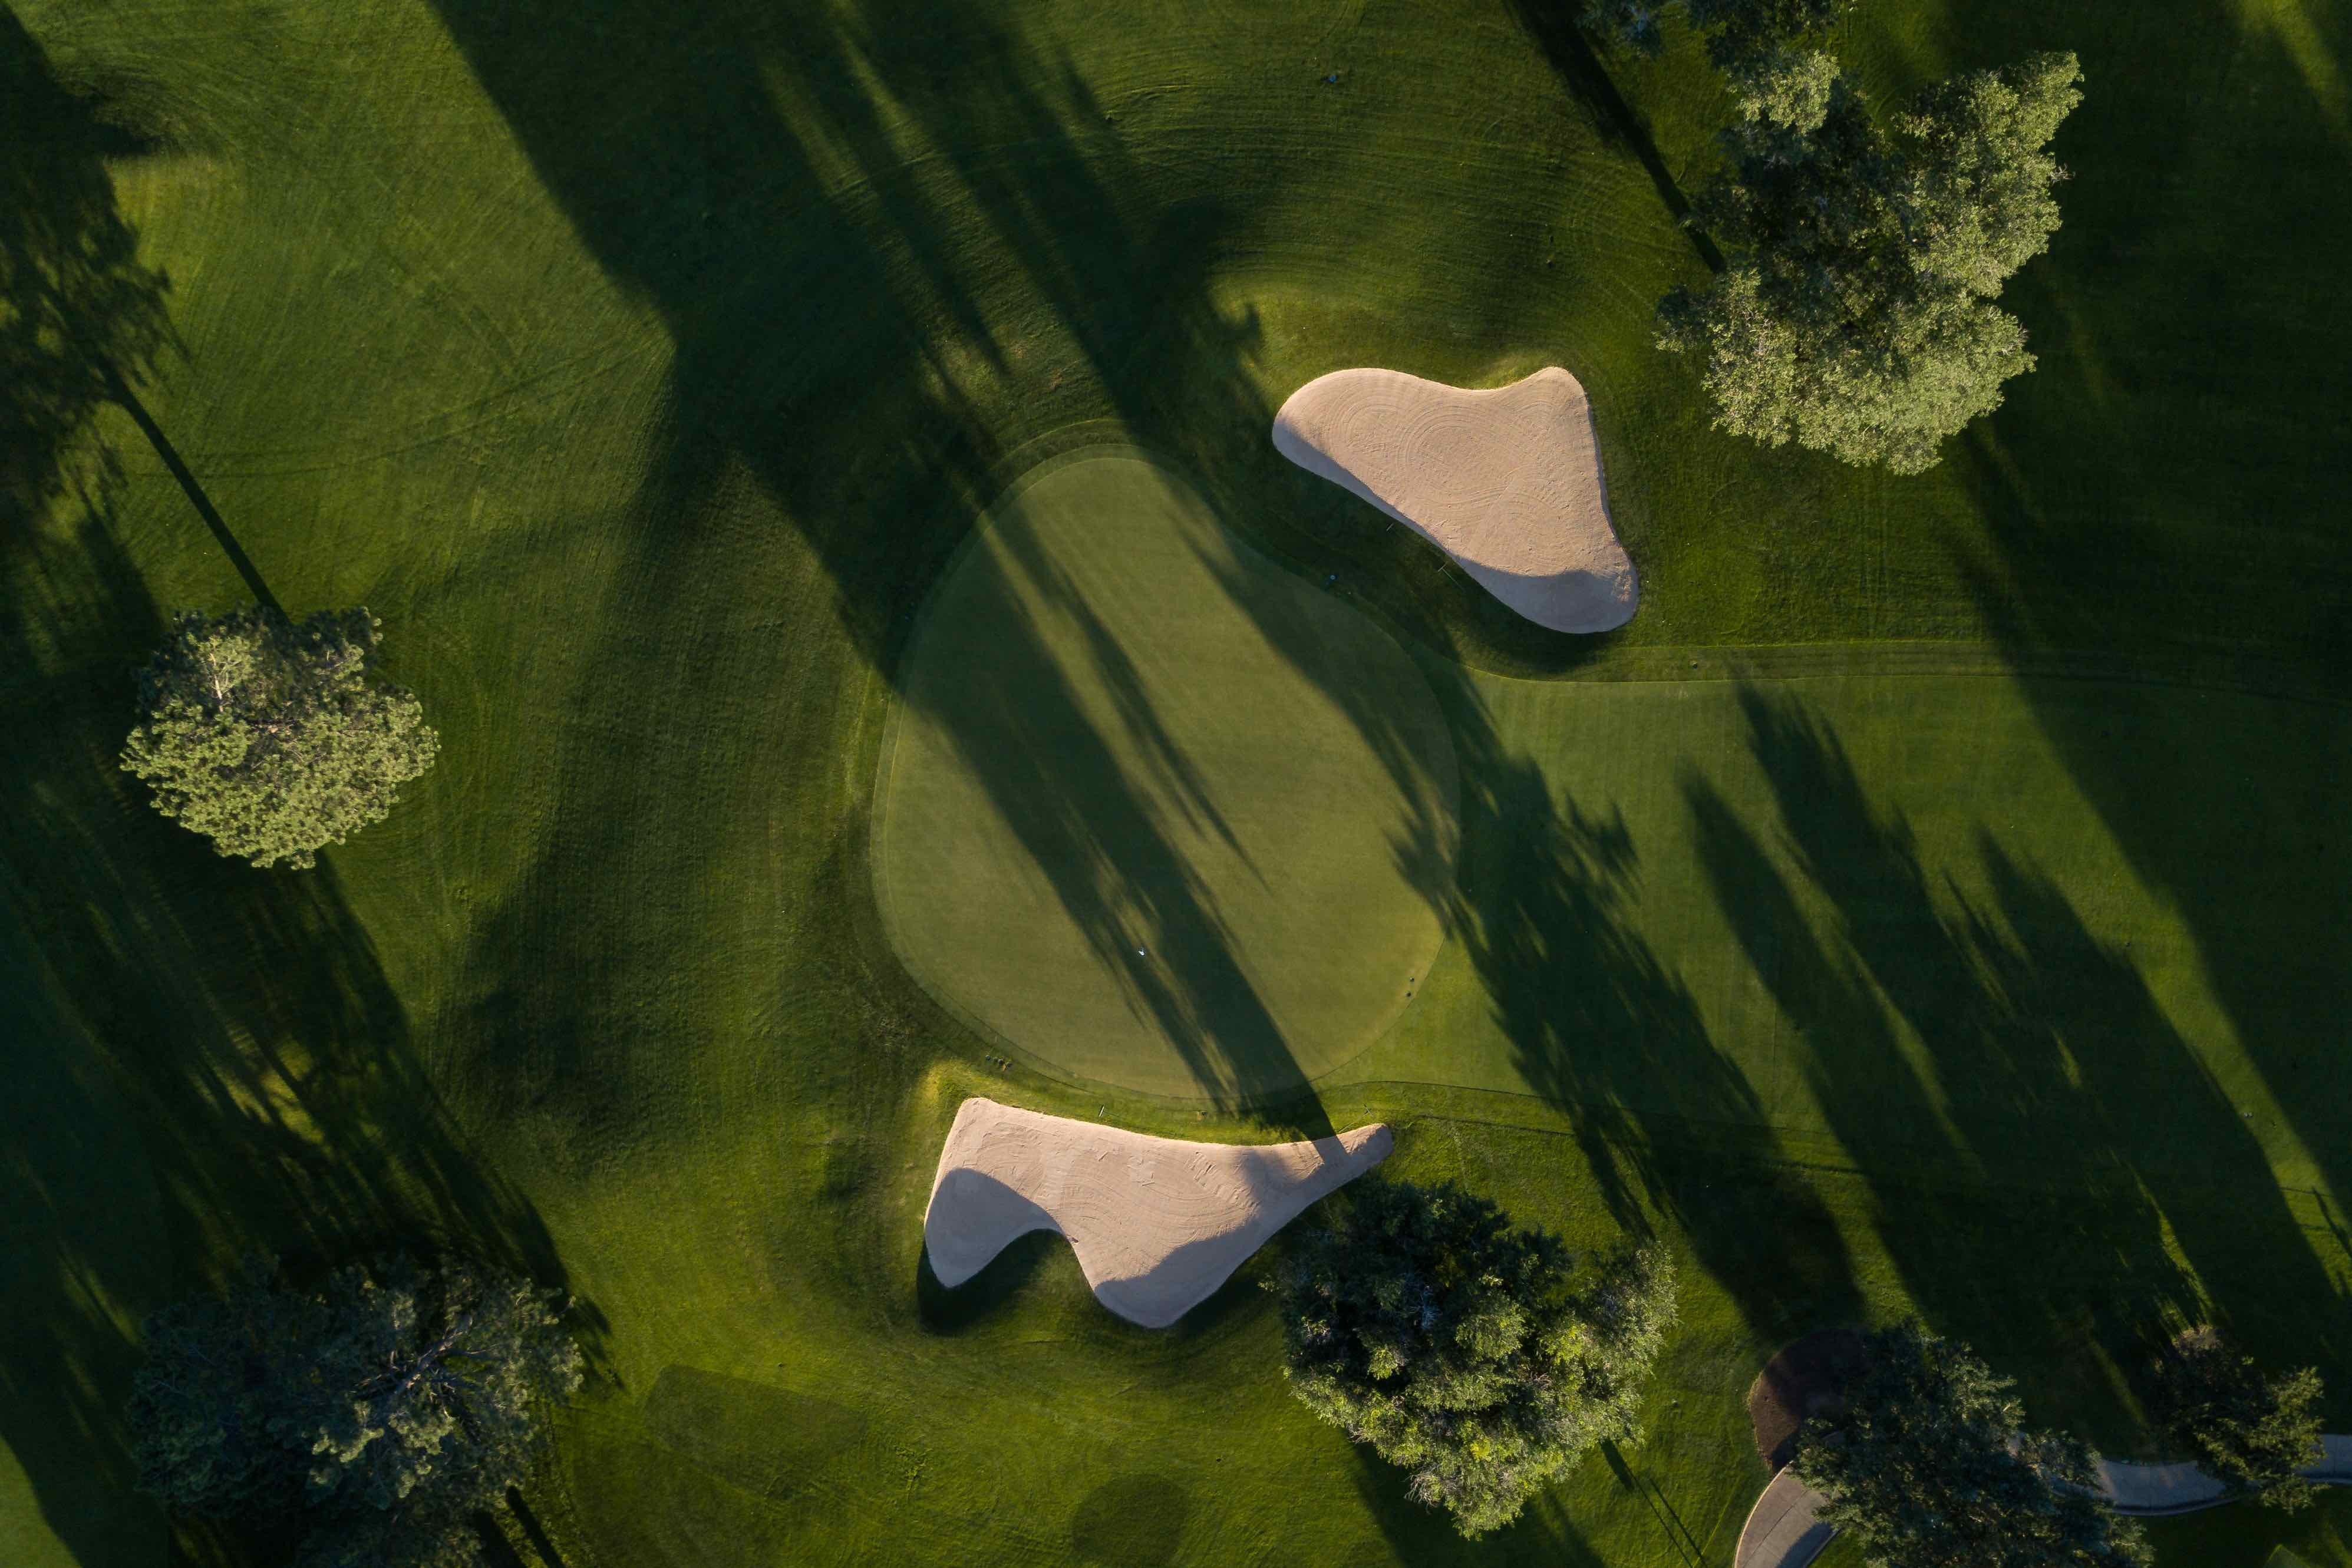 A-Ga-Ming Sundance Golf Course Homes for Sale in Kewadin, Michigan